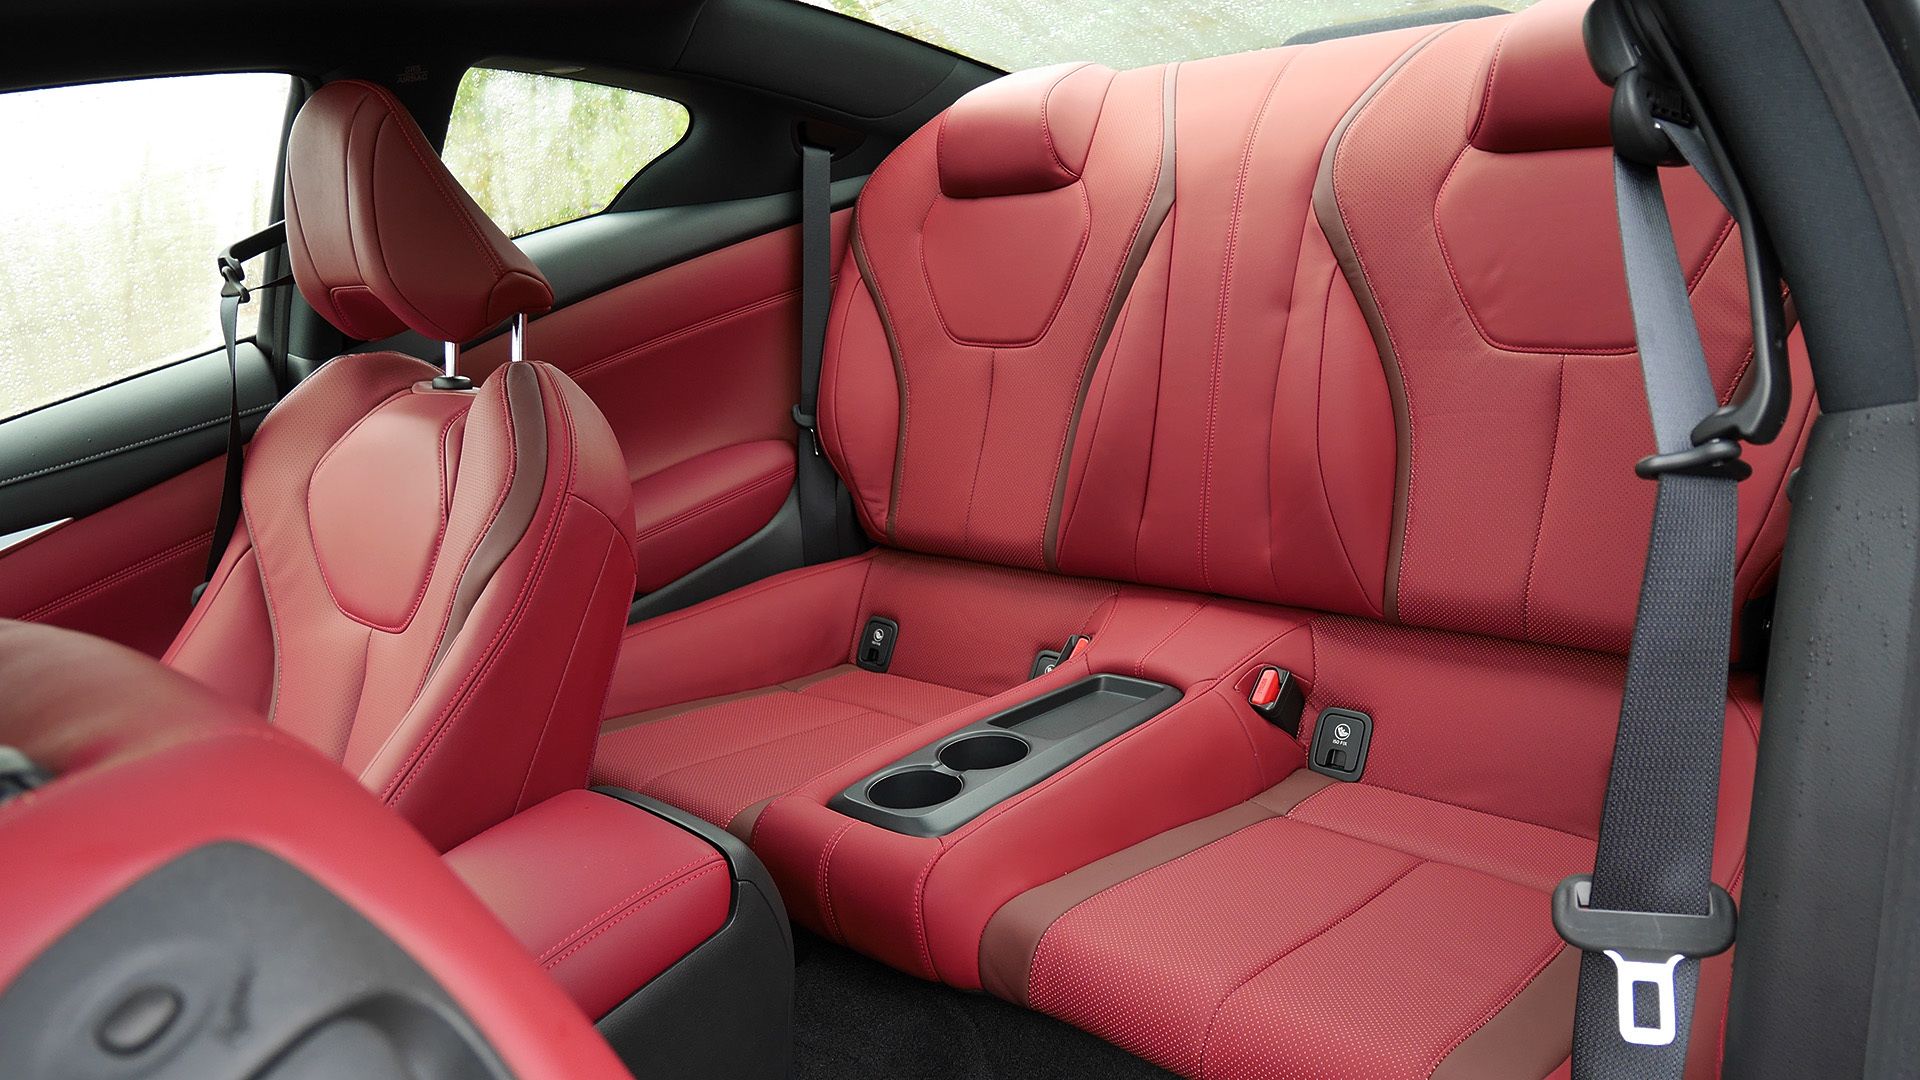 2017 Infiniti Q60 Interior Seats Rear (View 25 of 106)